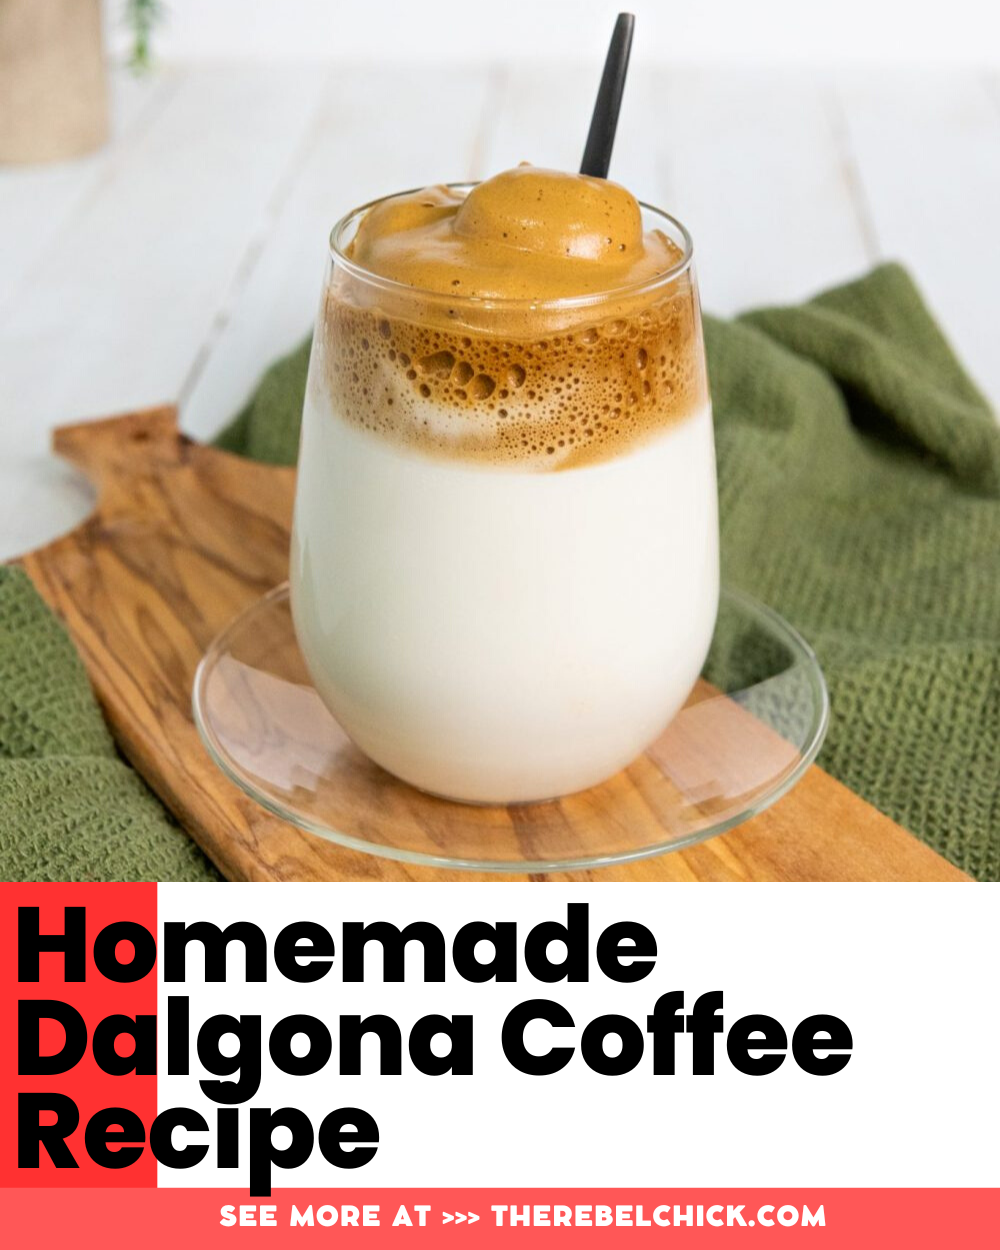 https://therebelchick.com/wp-content/uploads/2022/09/Homemade-Dalgona-Coffee-Recipe-2.png